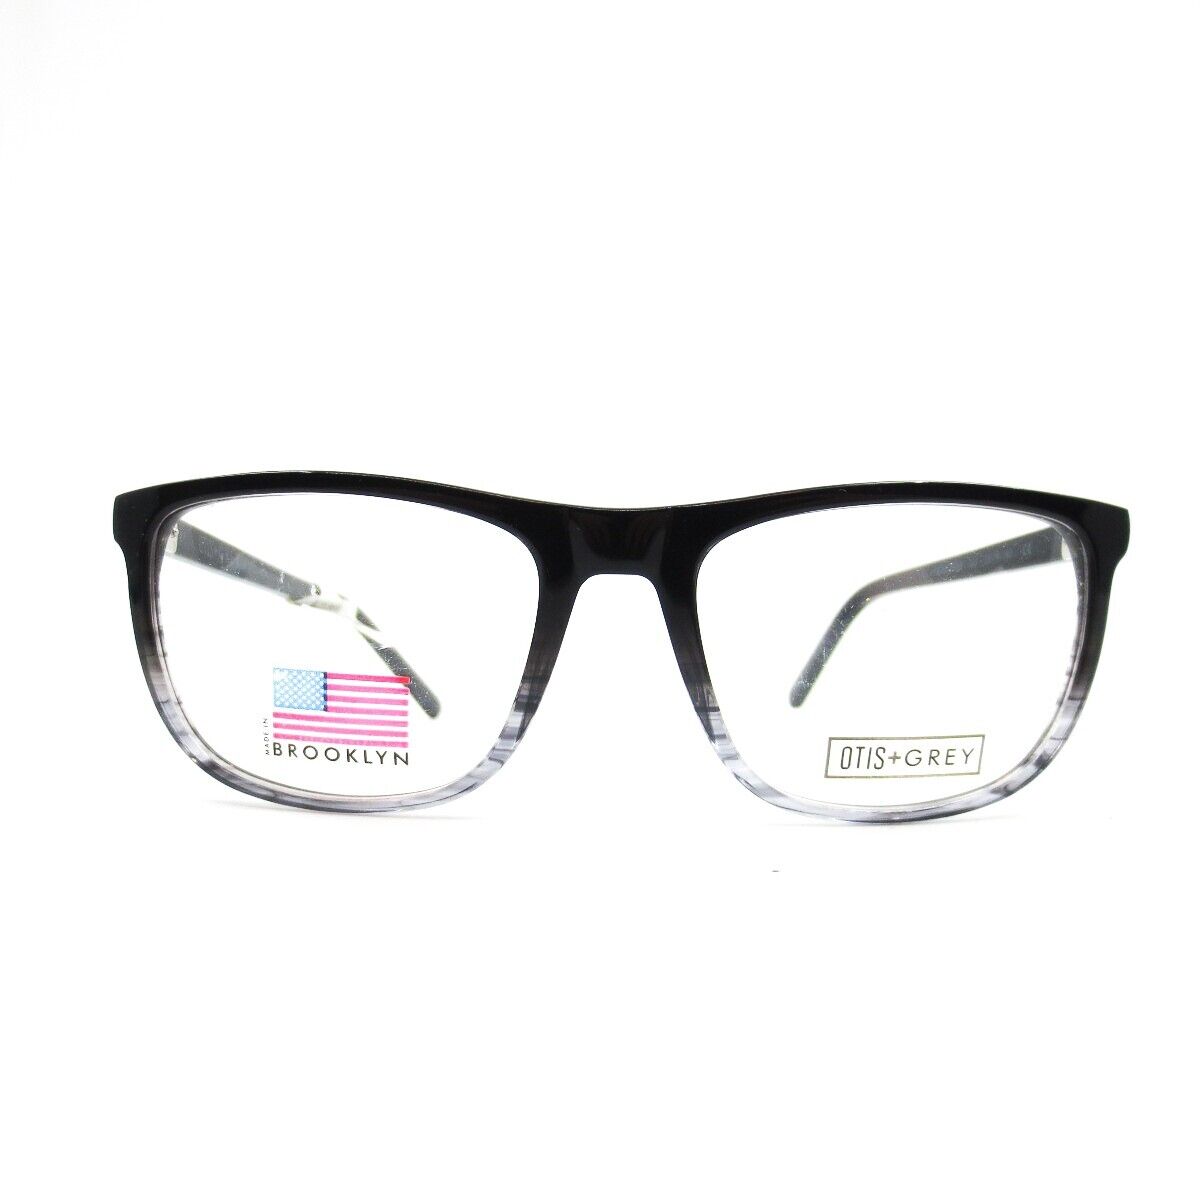 Otis Grey Brooklyn Eyeglasses Frames OG US 20203 343 gray black 55-19-145